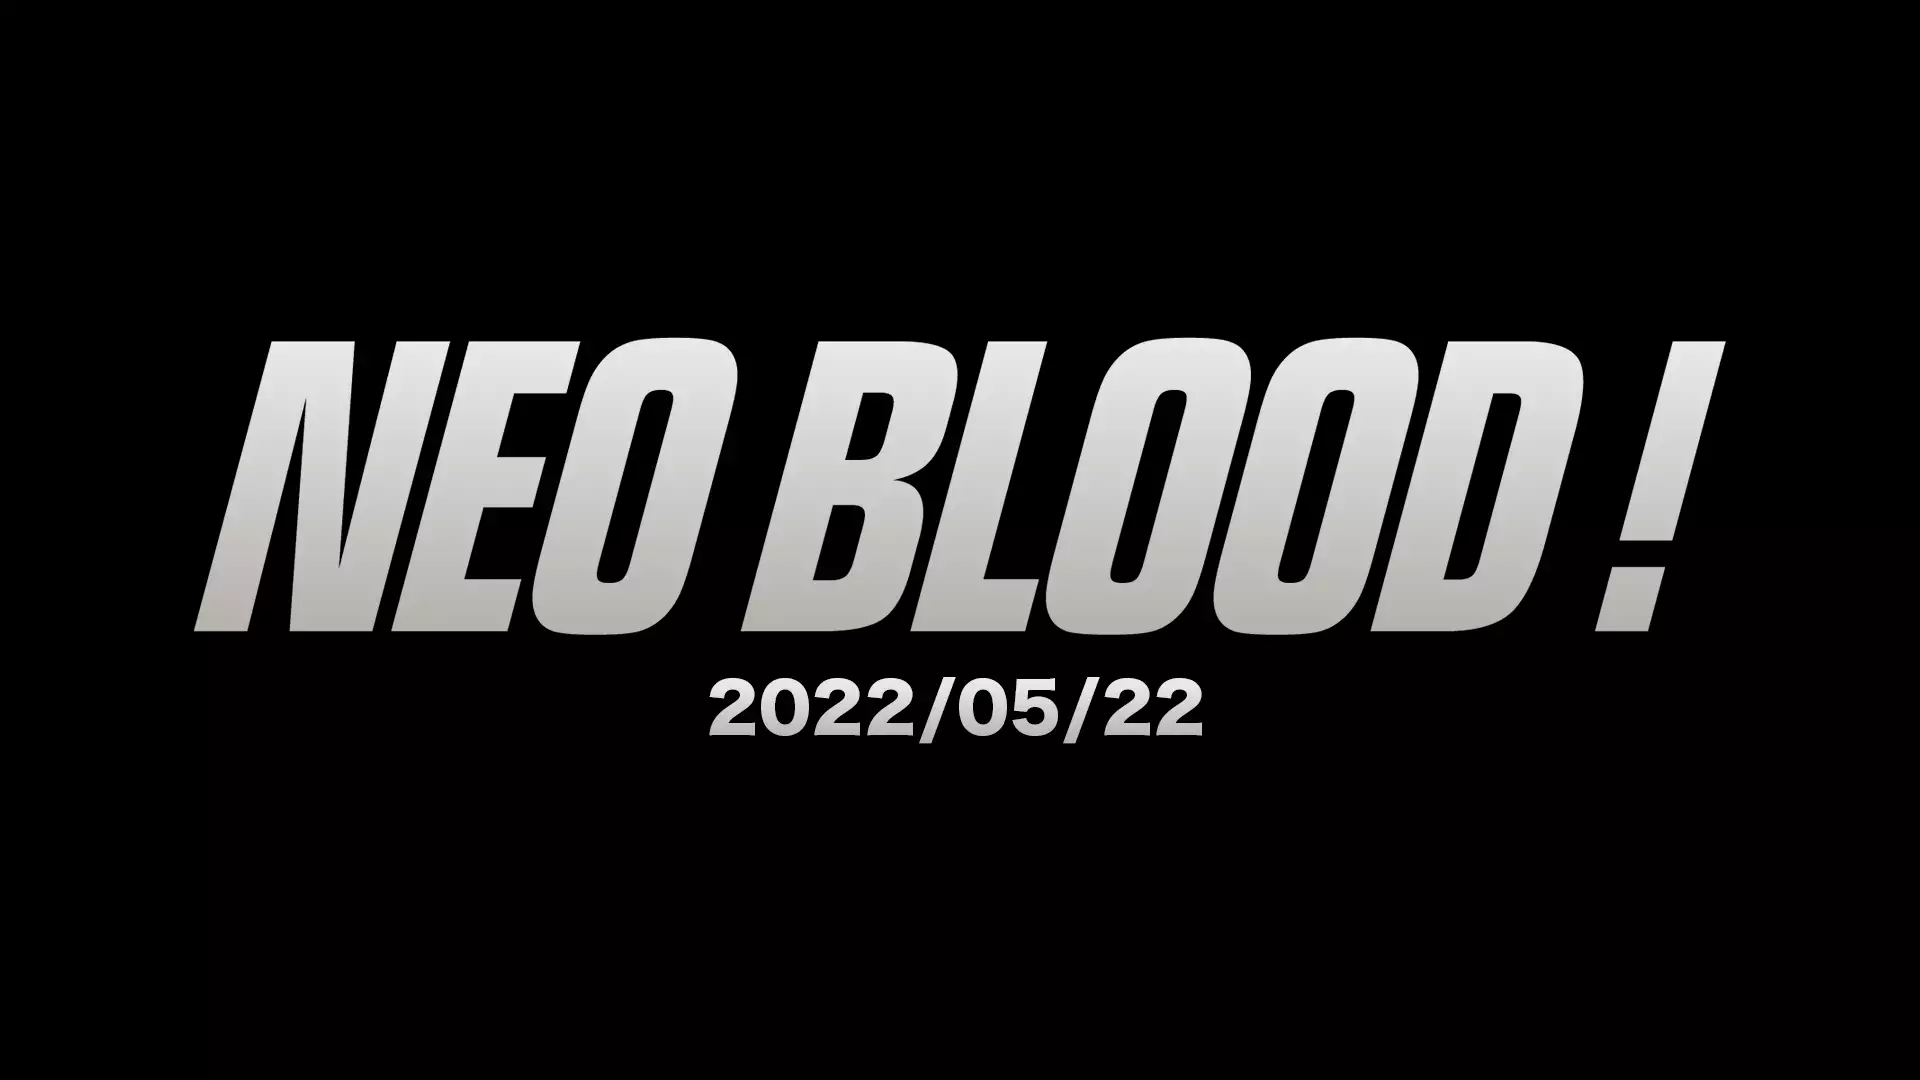 NEO BLOOD! 2022/05/22